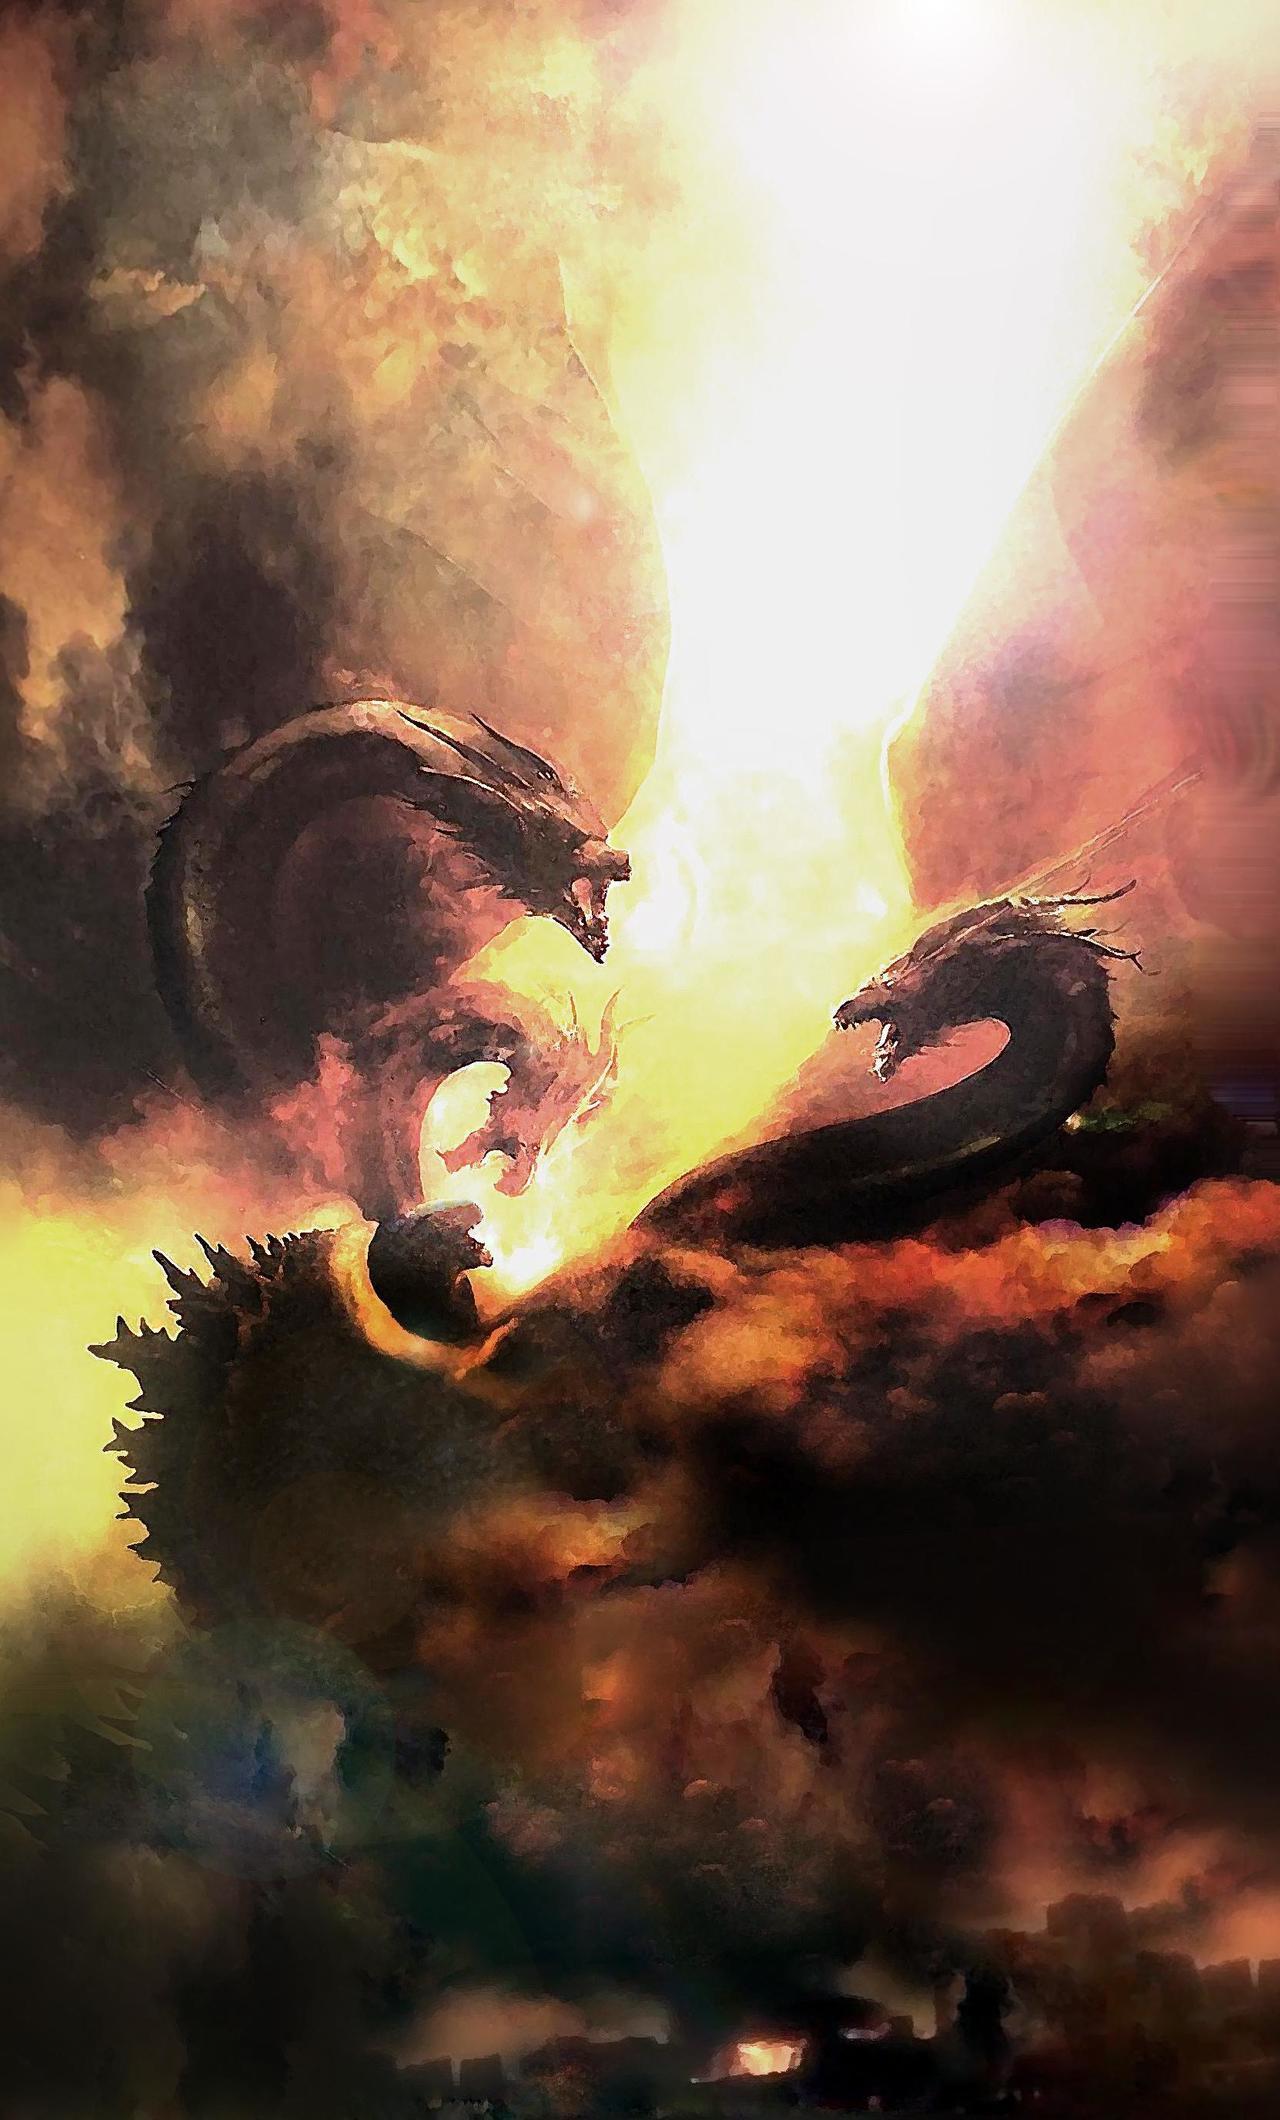 Godzilla vs ghidorah Wallpaper APK for Android Download